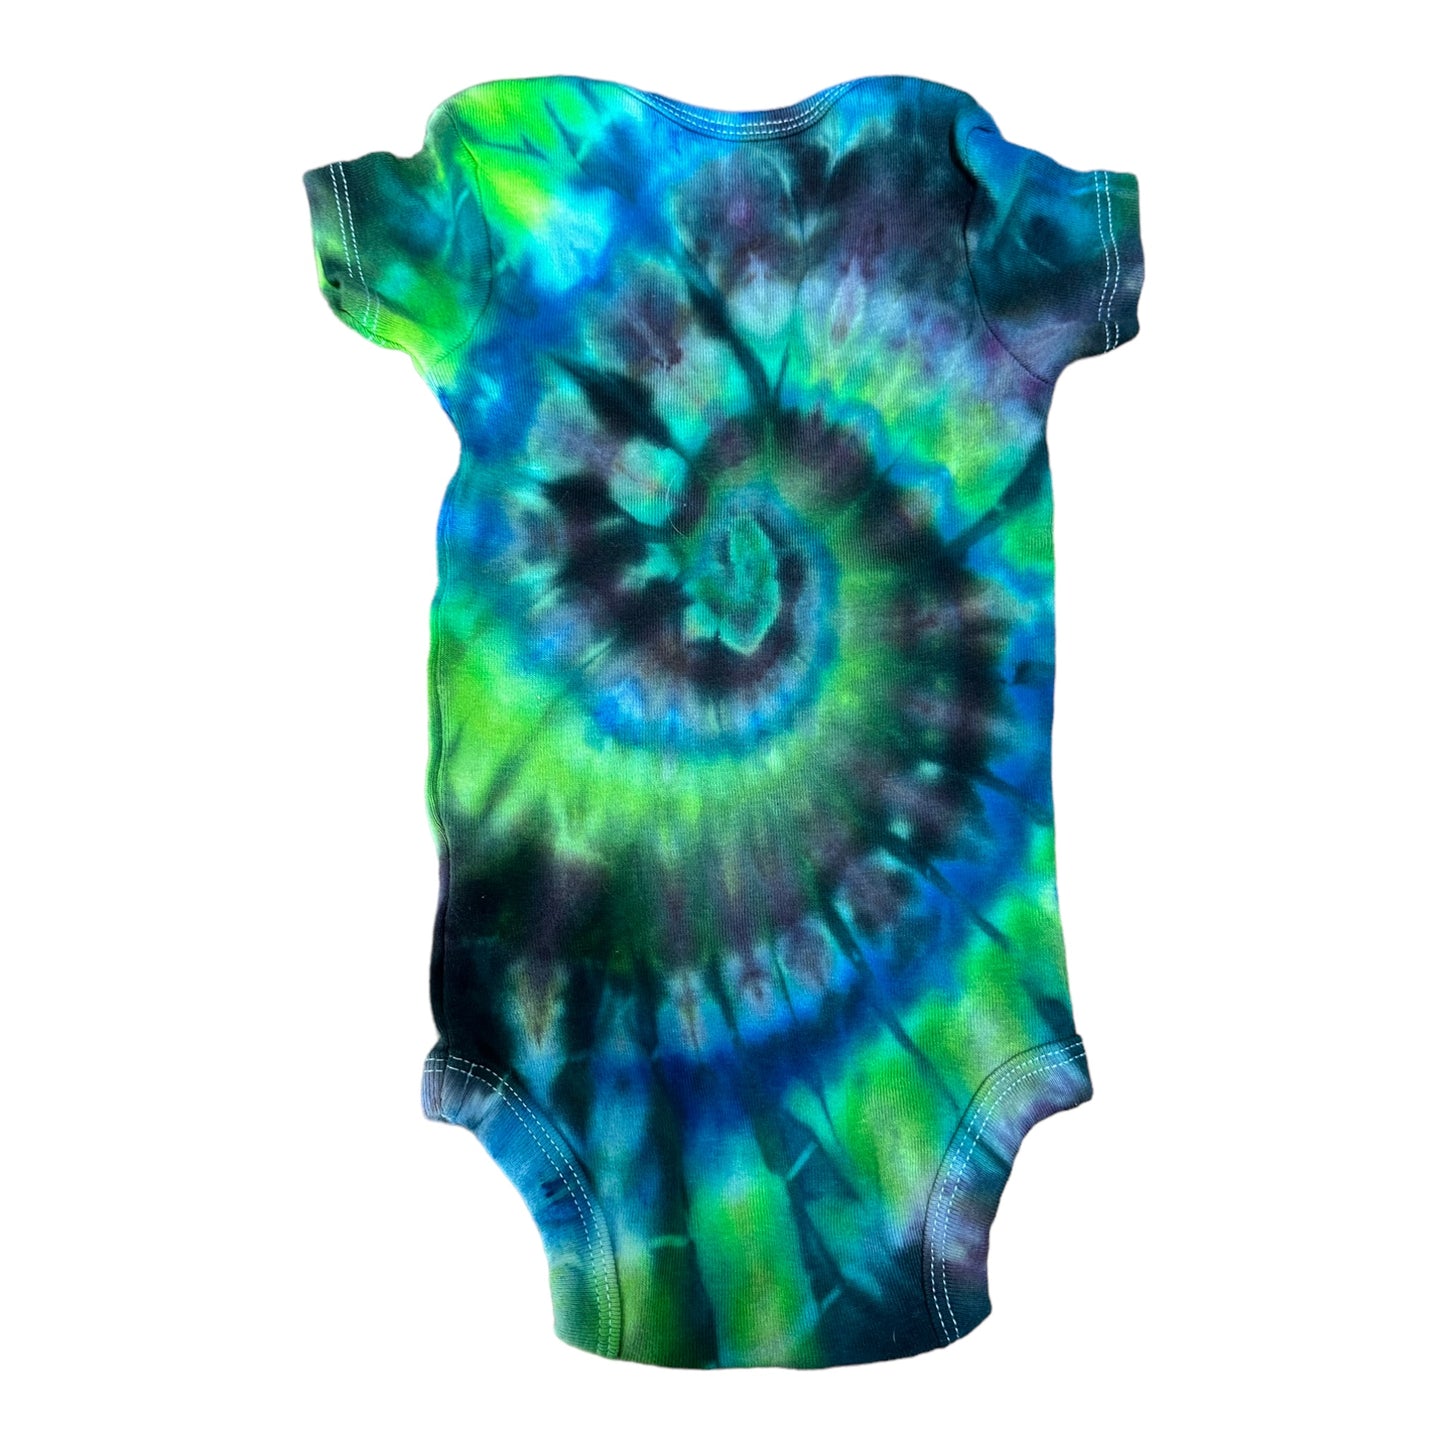 Infant 3-6 Months Black Green and Blue Spiral Ice Dye Tie Dye Onesie